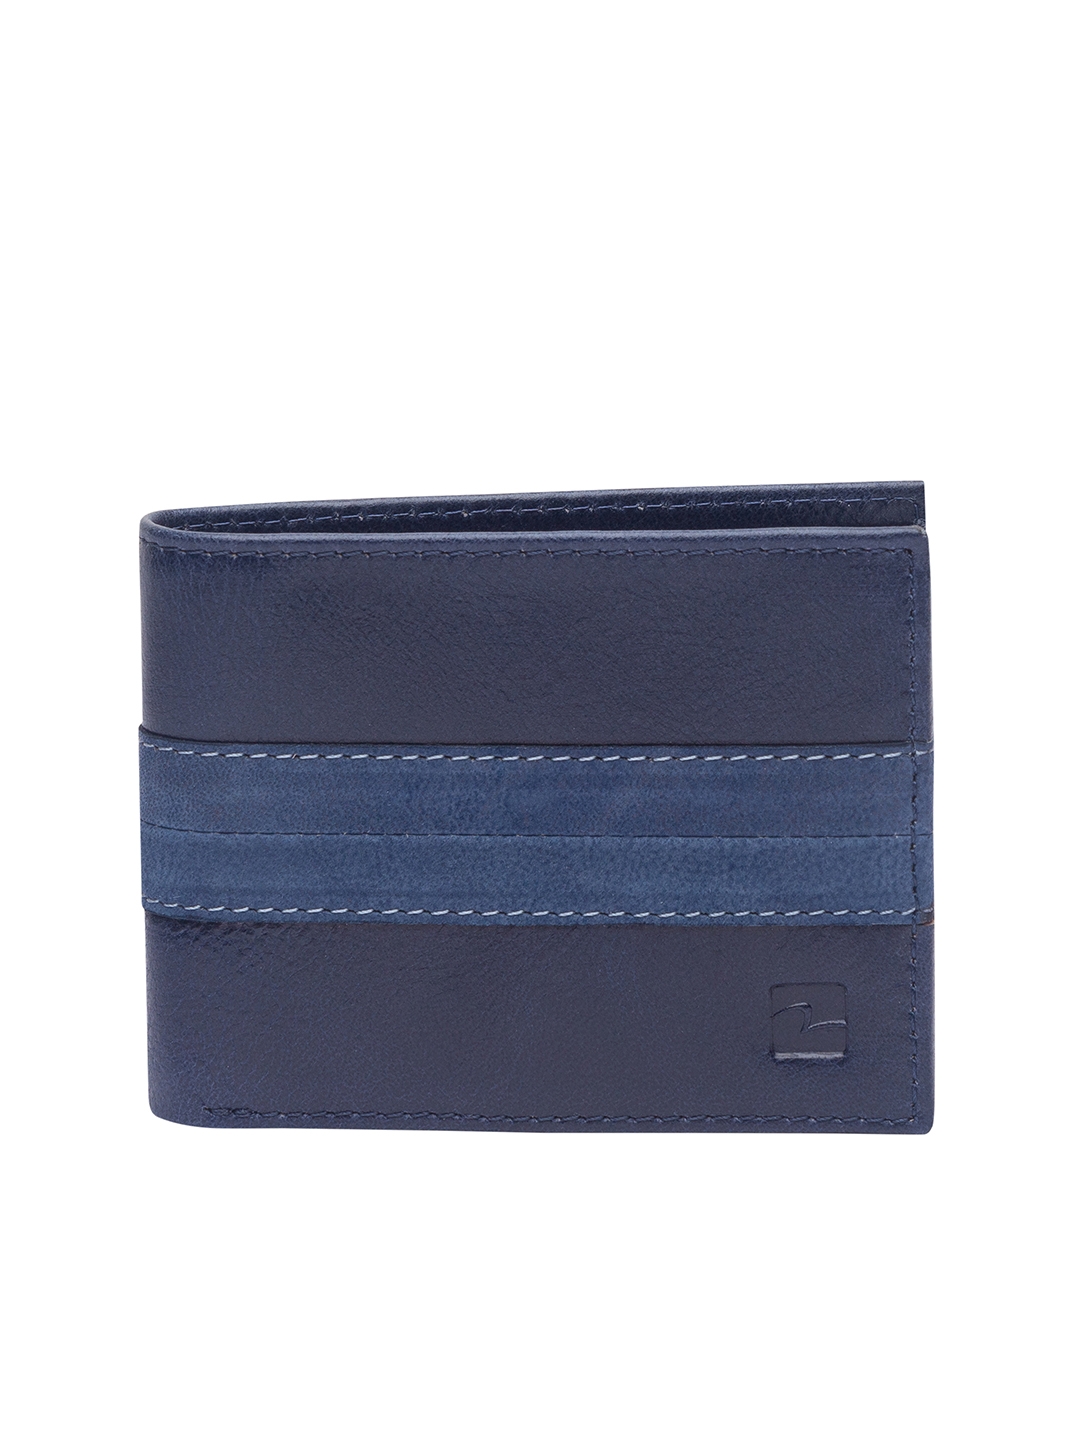 Spykar | Spykar Navy Genuine Leather Wallet